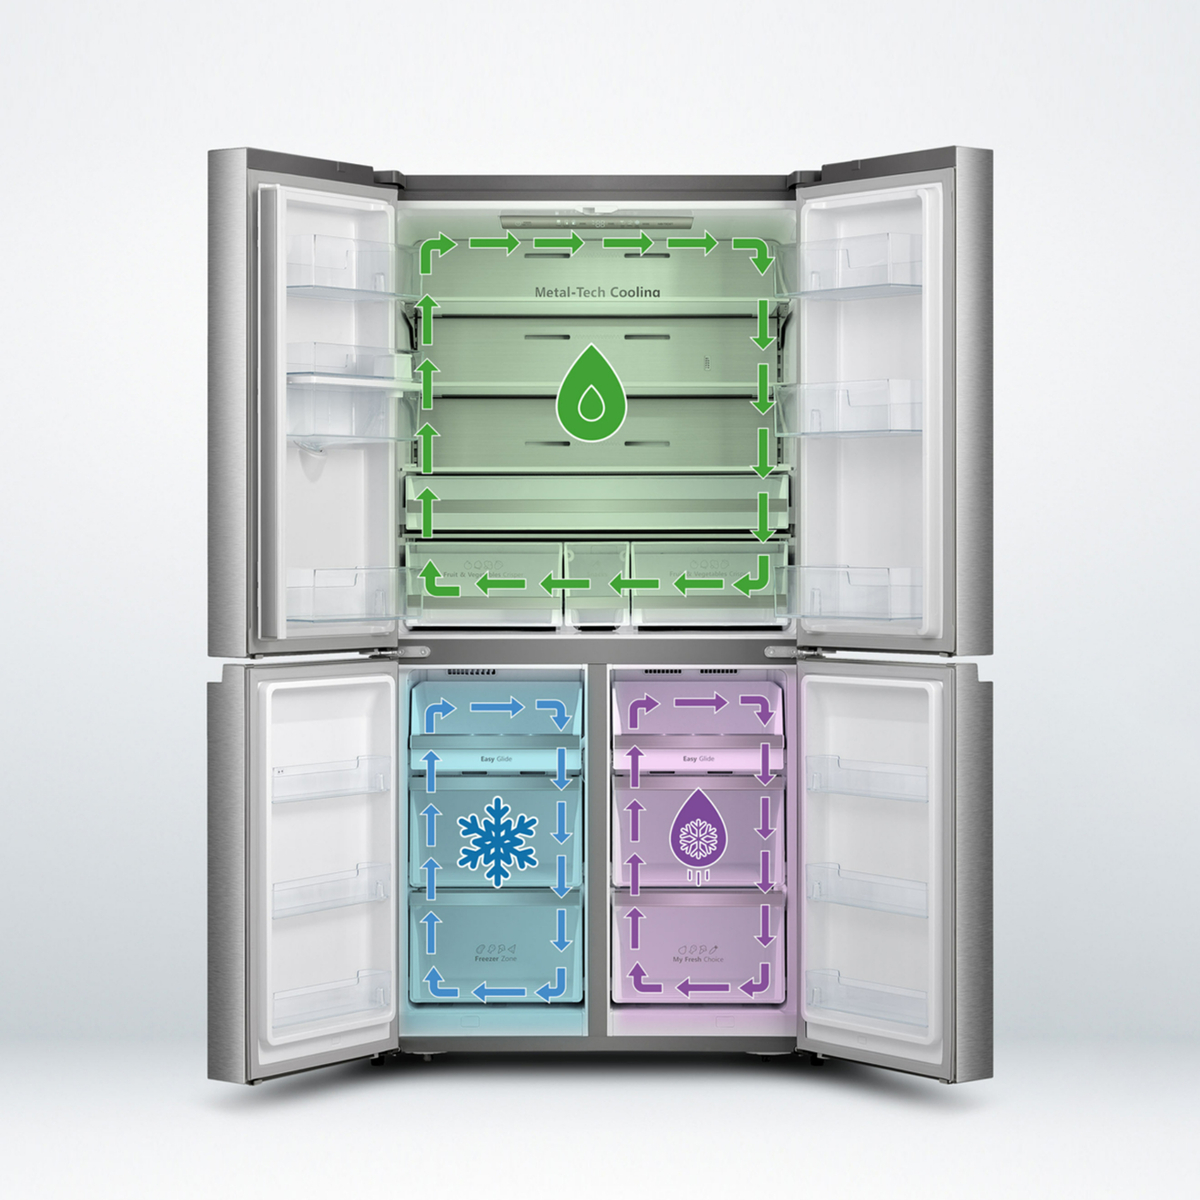 Hisense Four Door French Refrigerator, 579L, Silver, RQ749N4ASU